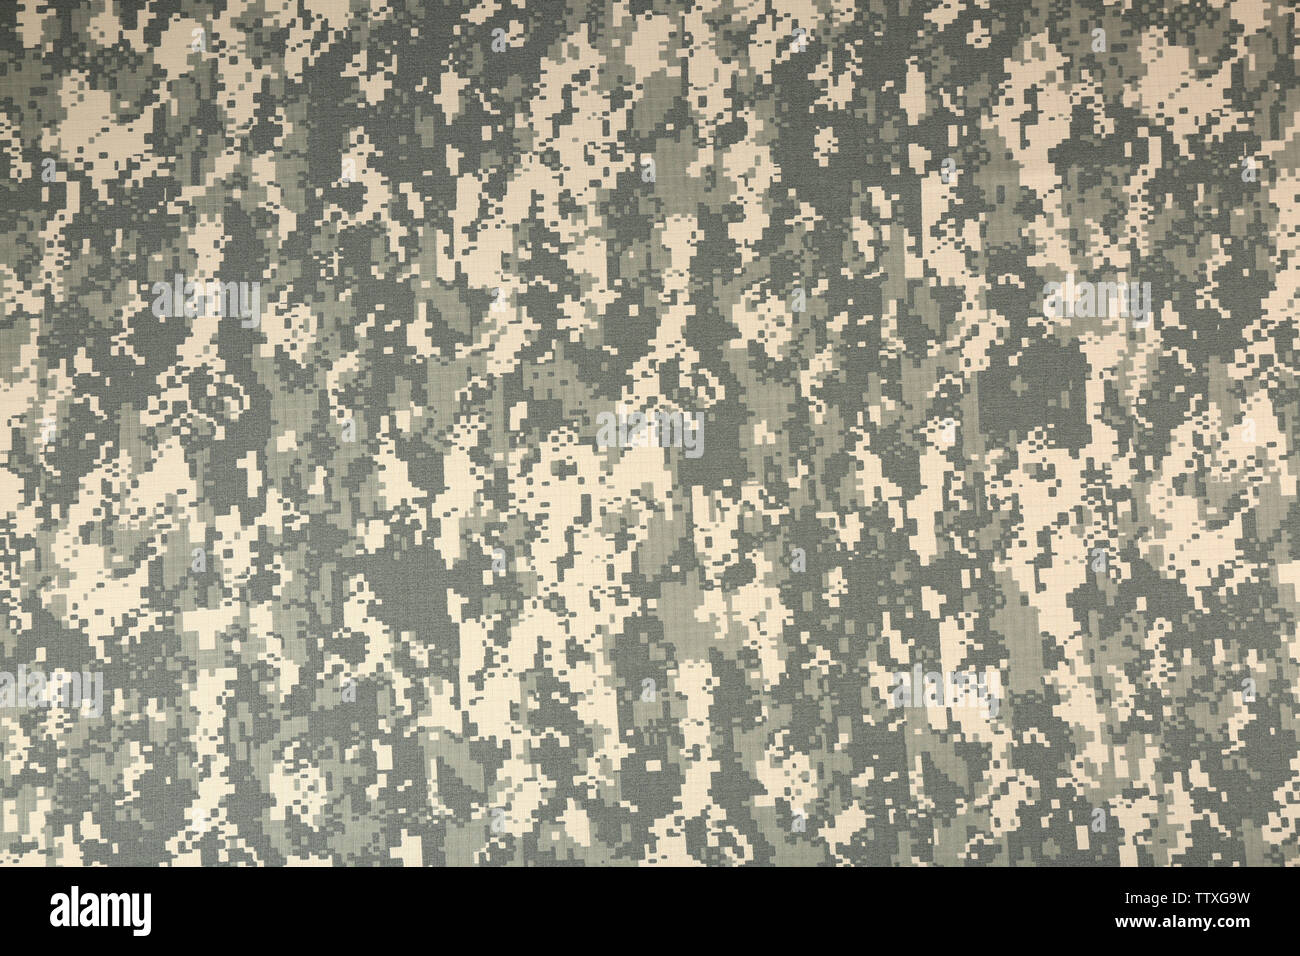 Camouflage fabric texture background Stock Photo - Alamy